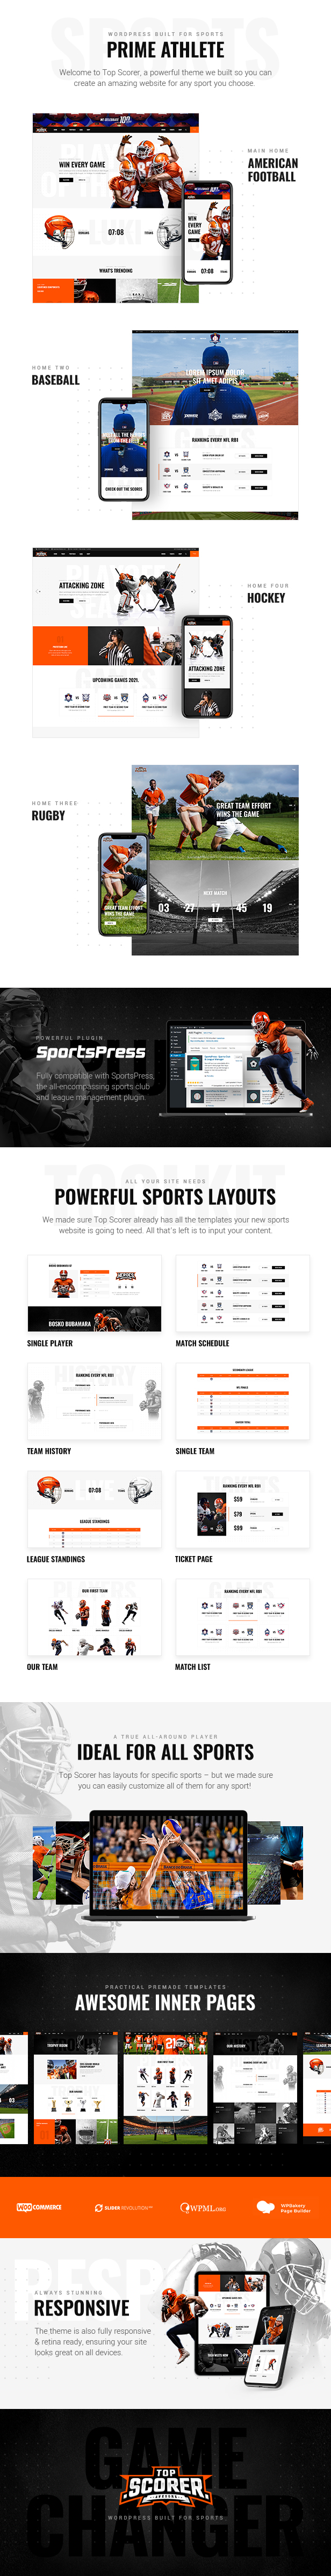 TopScorer - Sports WordPress Theme - 1